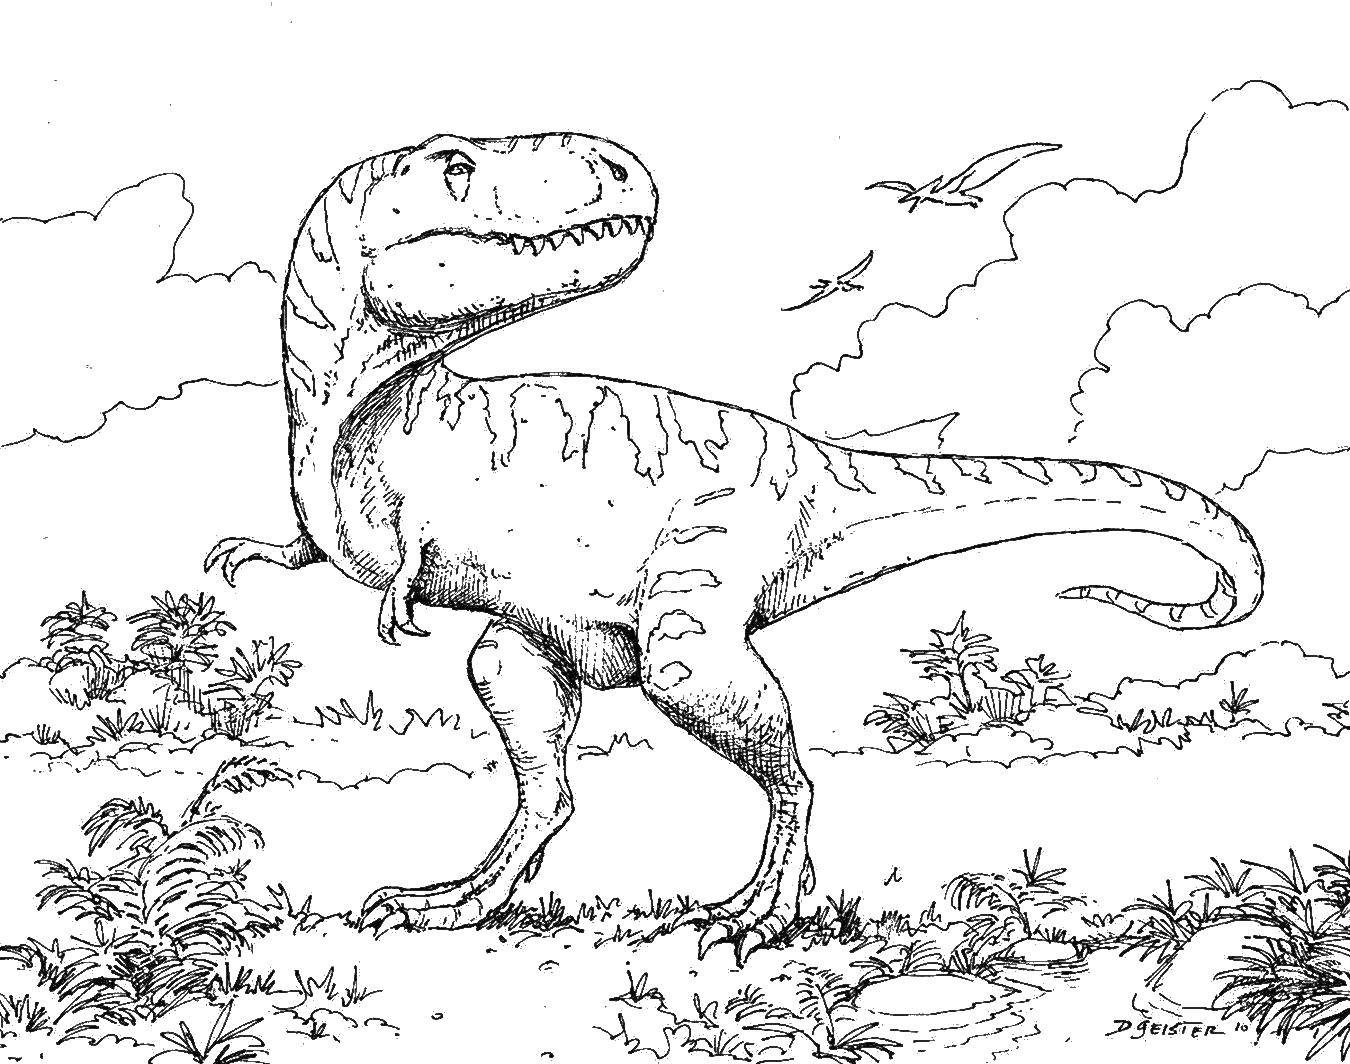 Coloring Giant Tyrannosaurus wanders. Category dinosaur. Tags:  Dinosaurs.